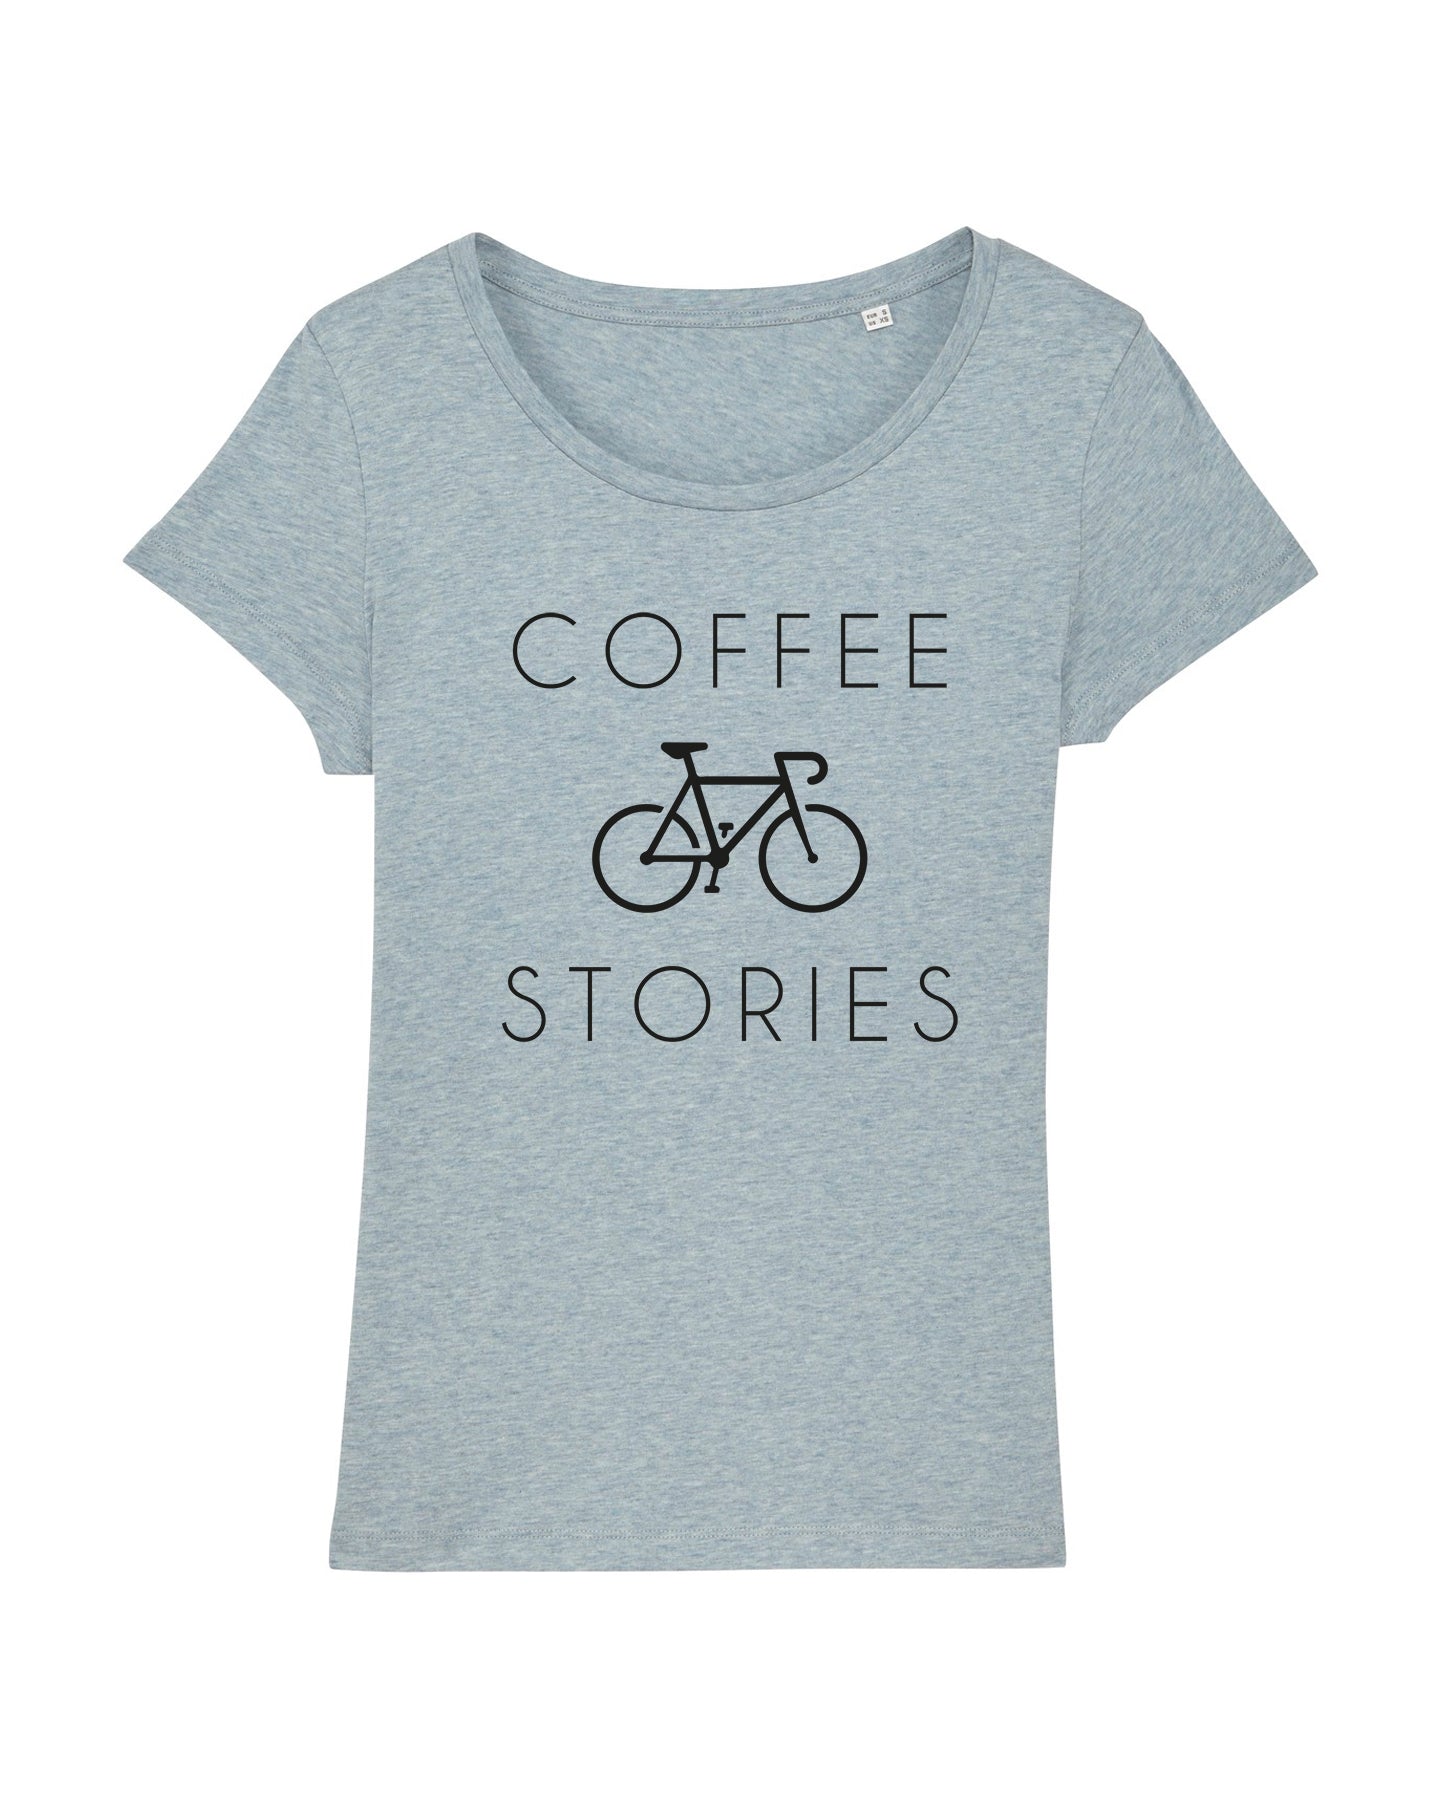 Coffee - Bike - Stories Women T-Shirt